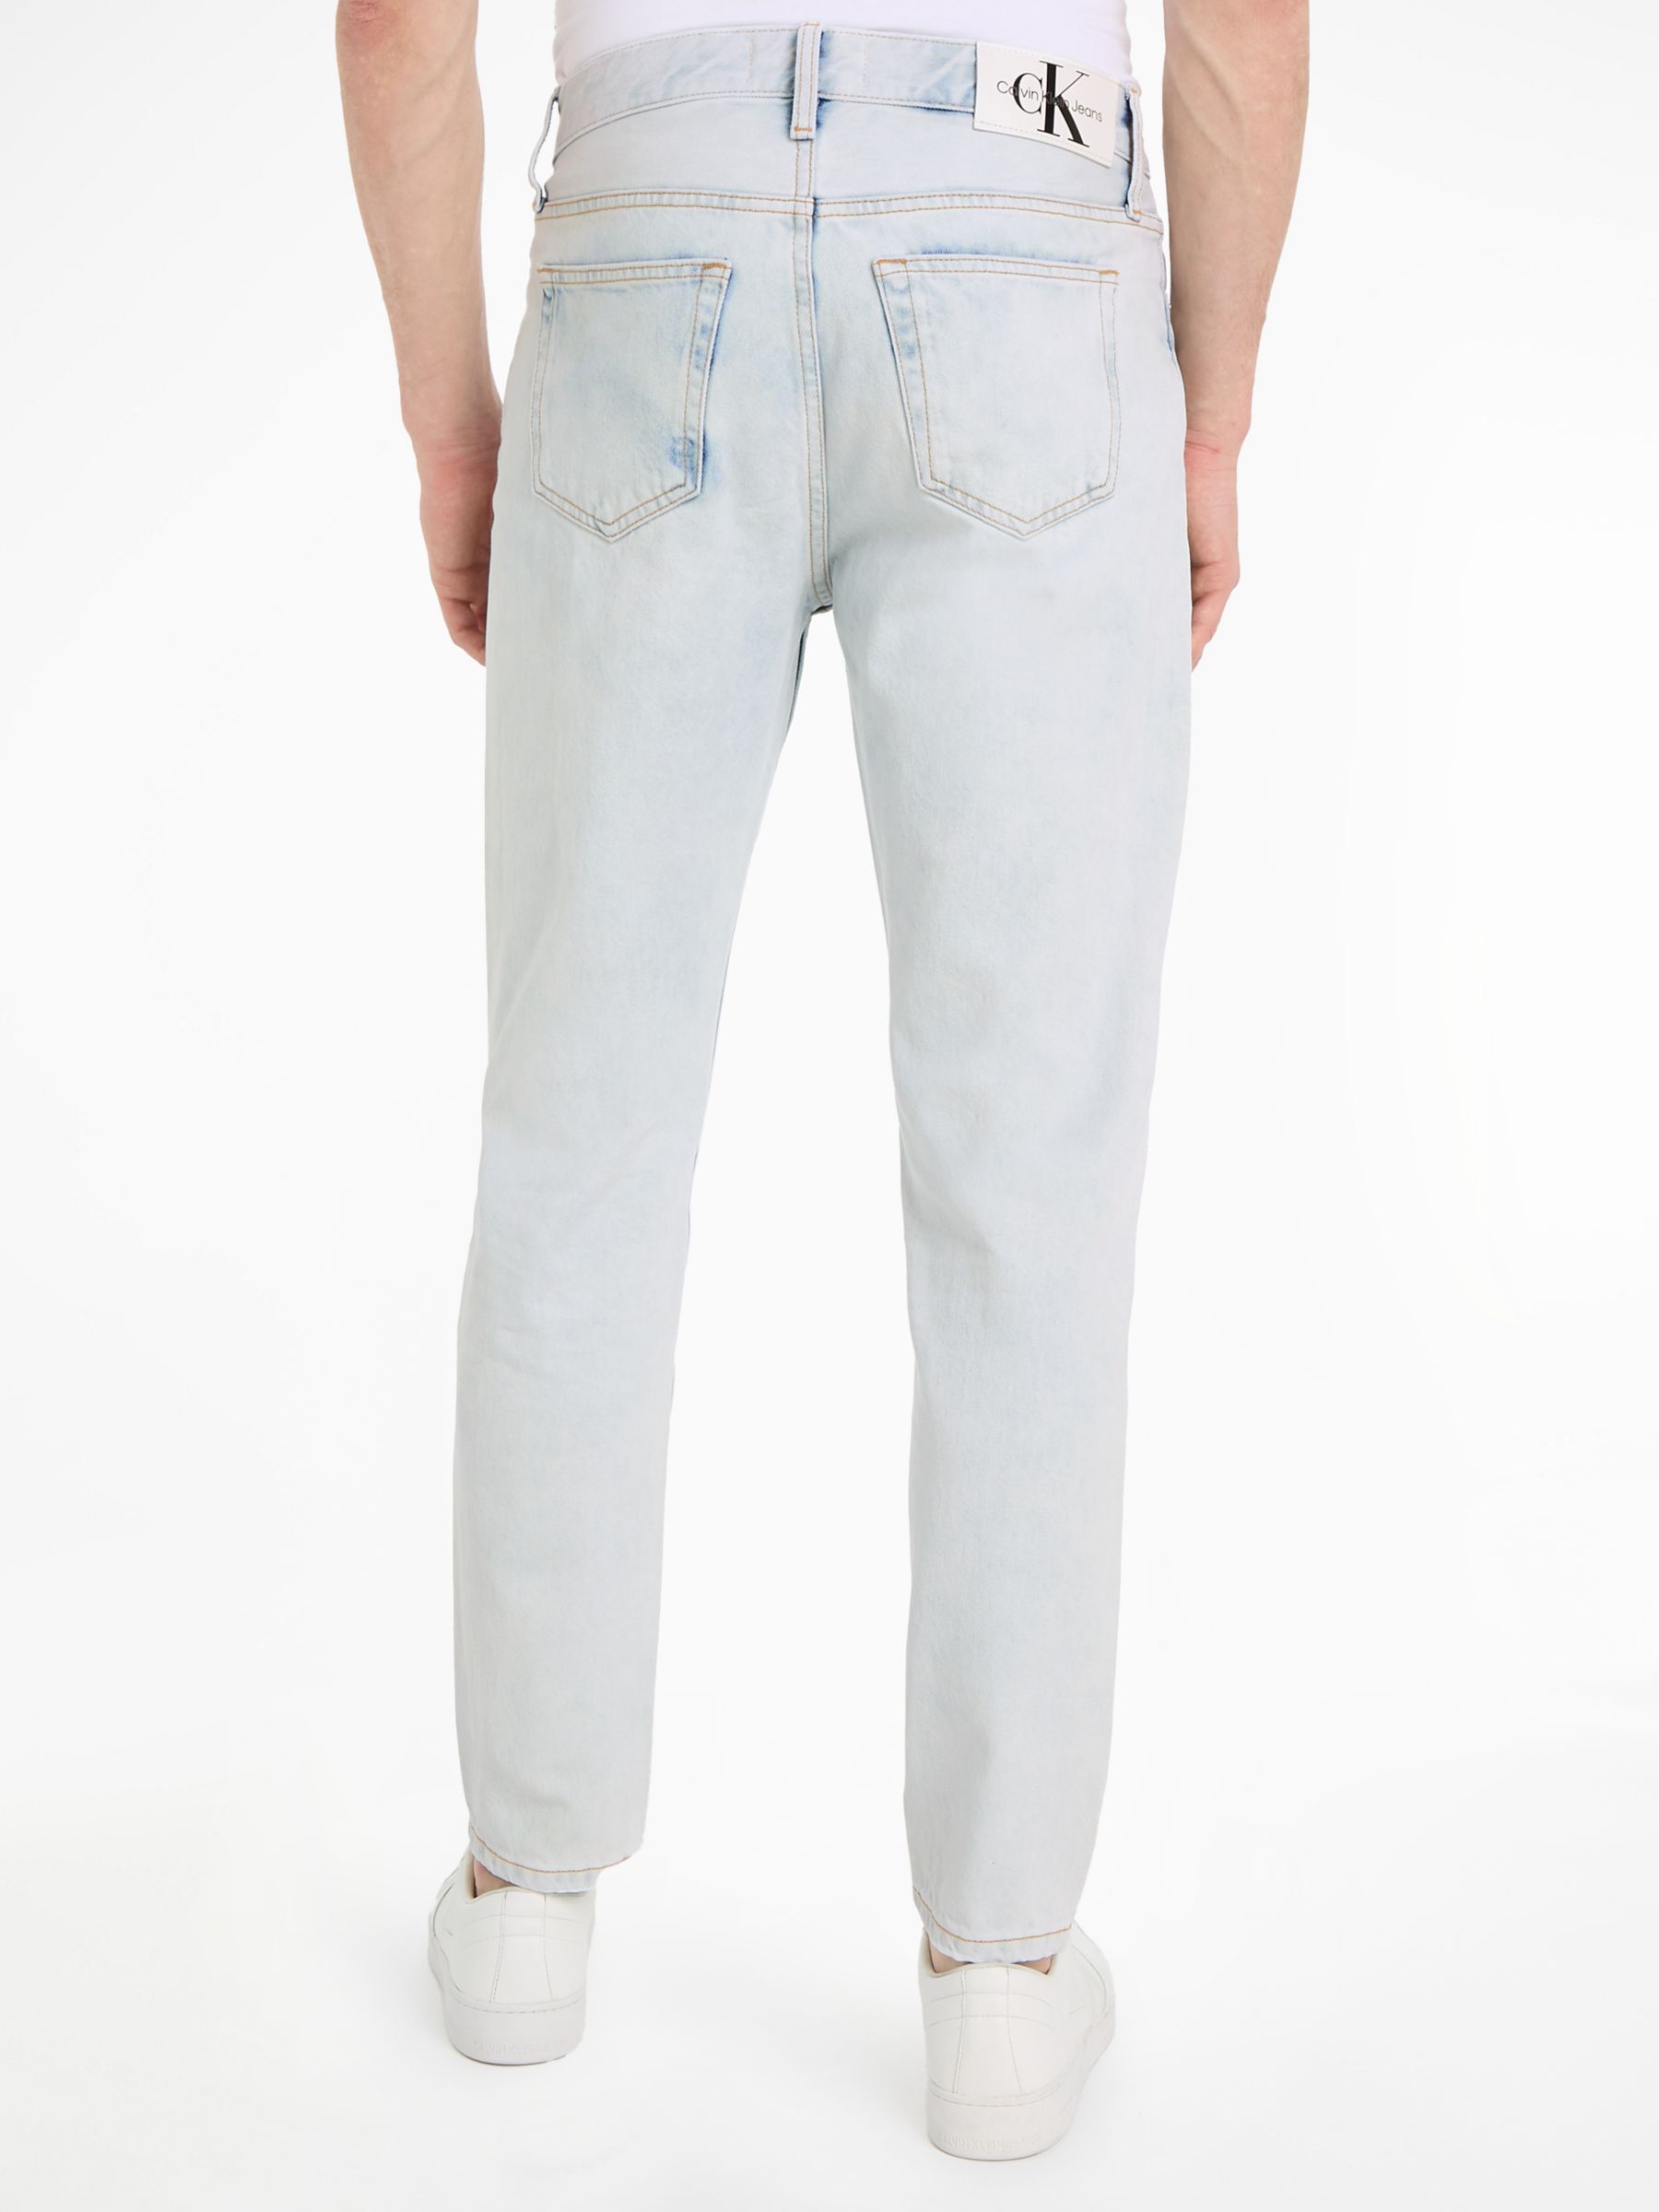 Calvin Klein Jeans Tapered Jeans, Denim Light, 28R